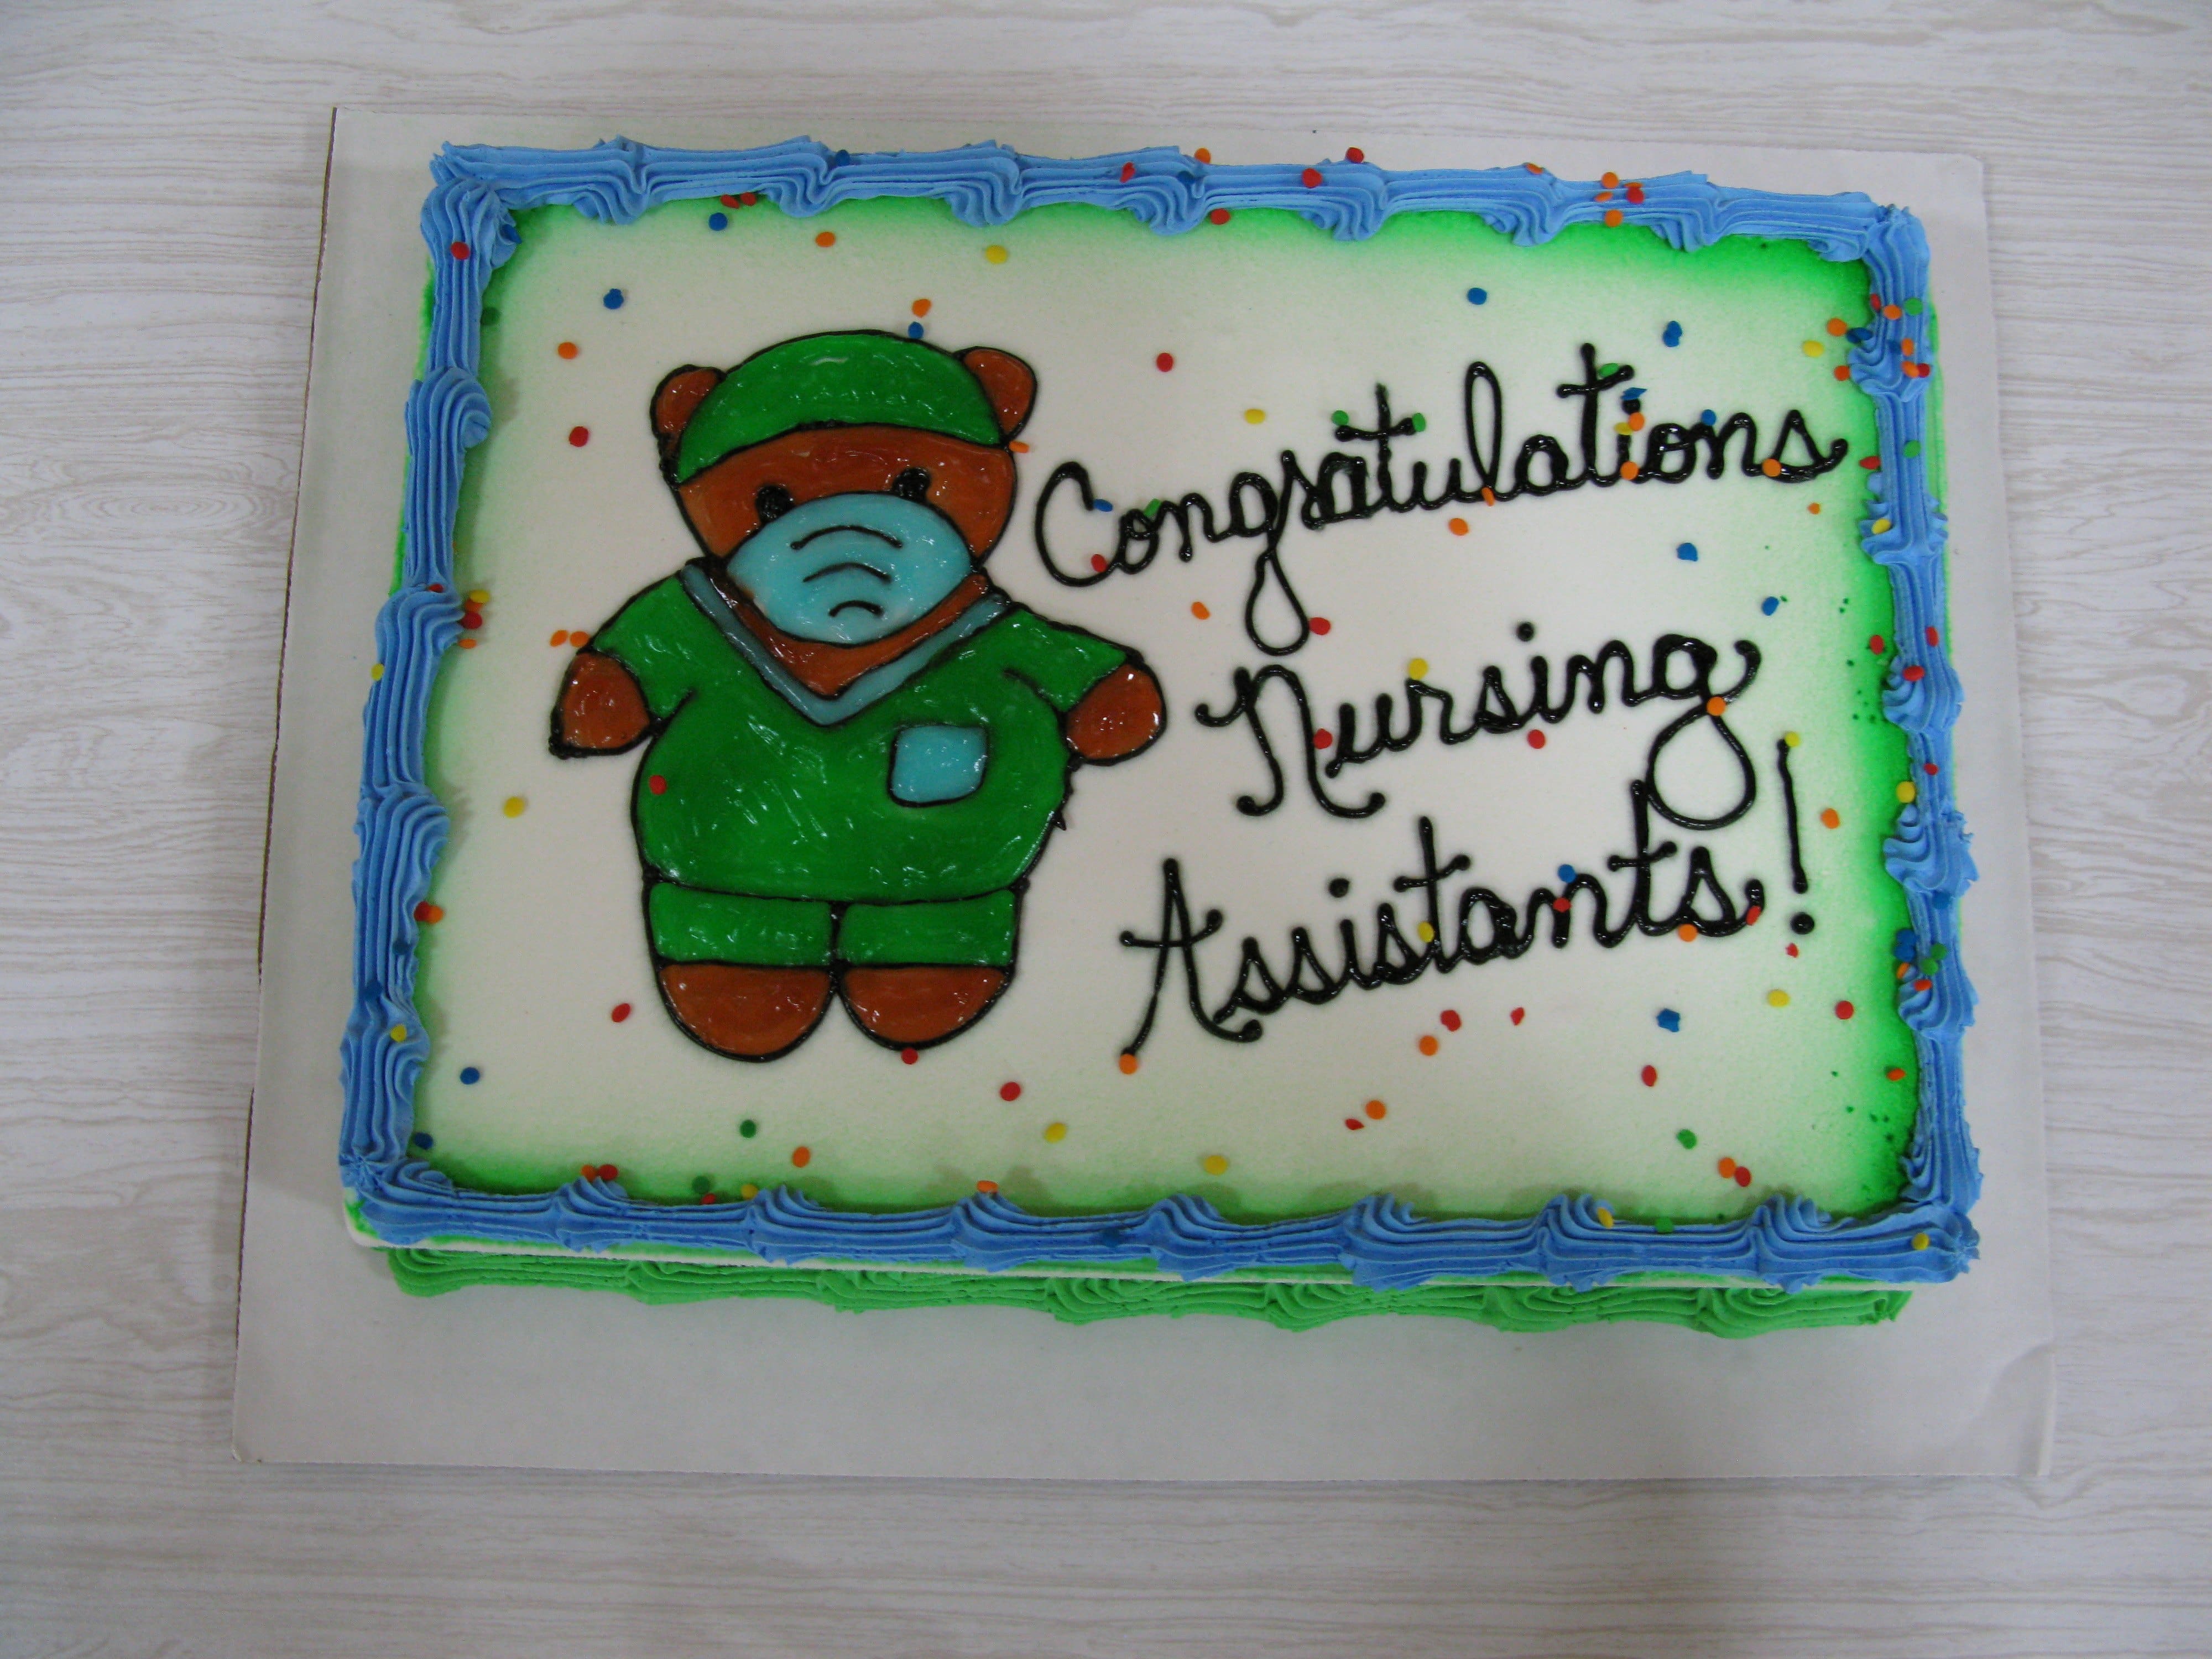 Cake reading "congratulations nursing assistants"